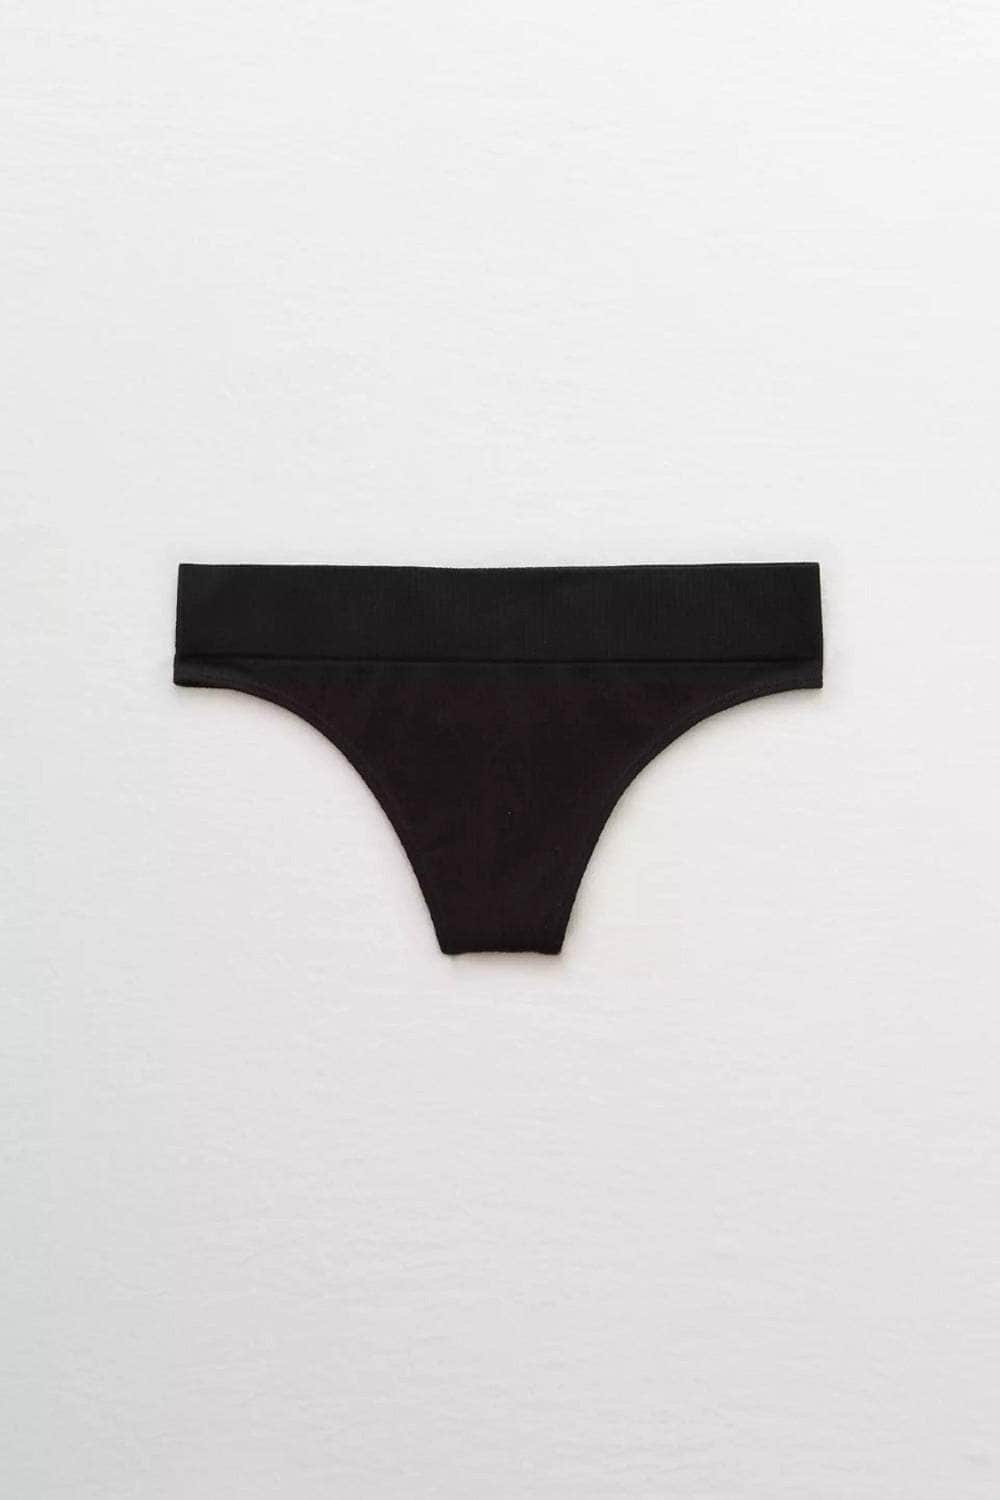 Black Strap Underpants - BEEGLEE